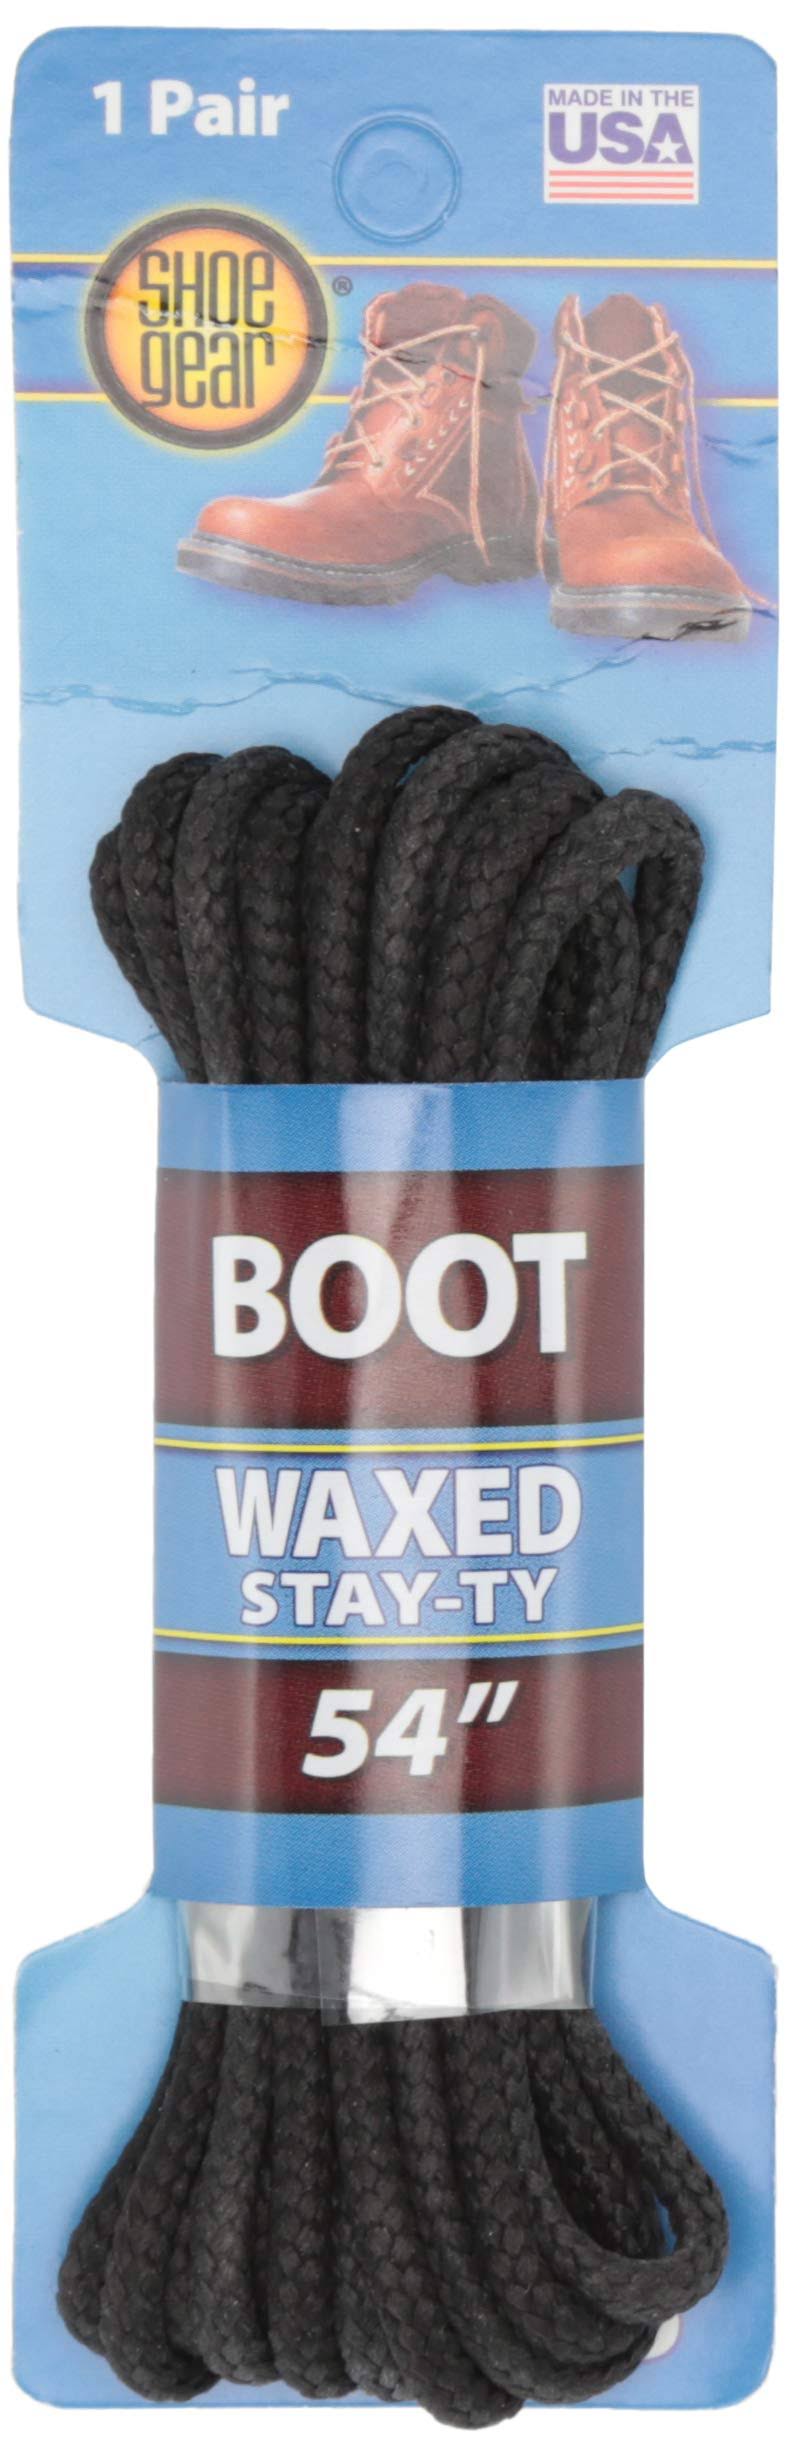 Shoe Gear Waxed Boot Laces - Black/Black, 54"